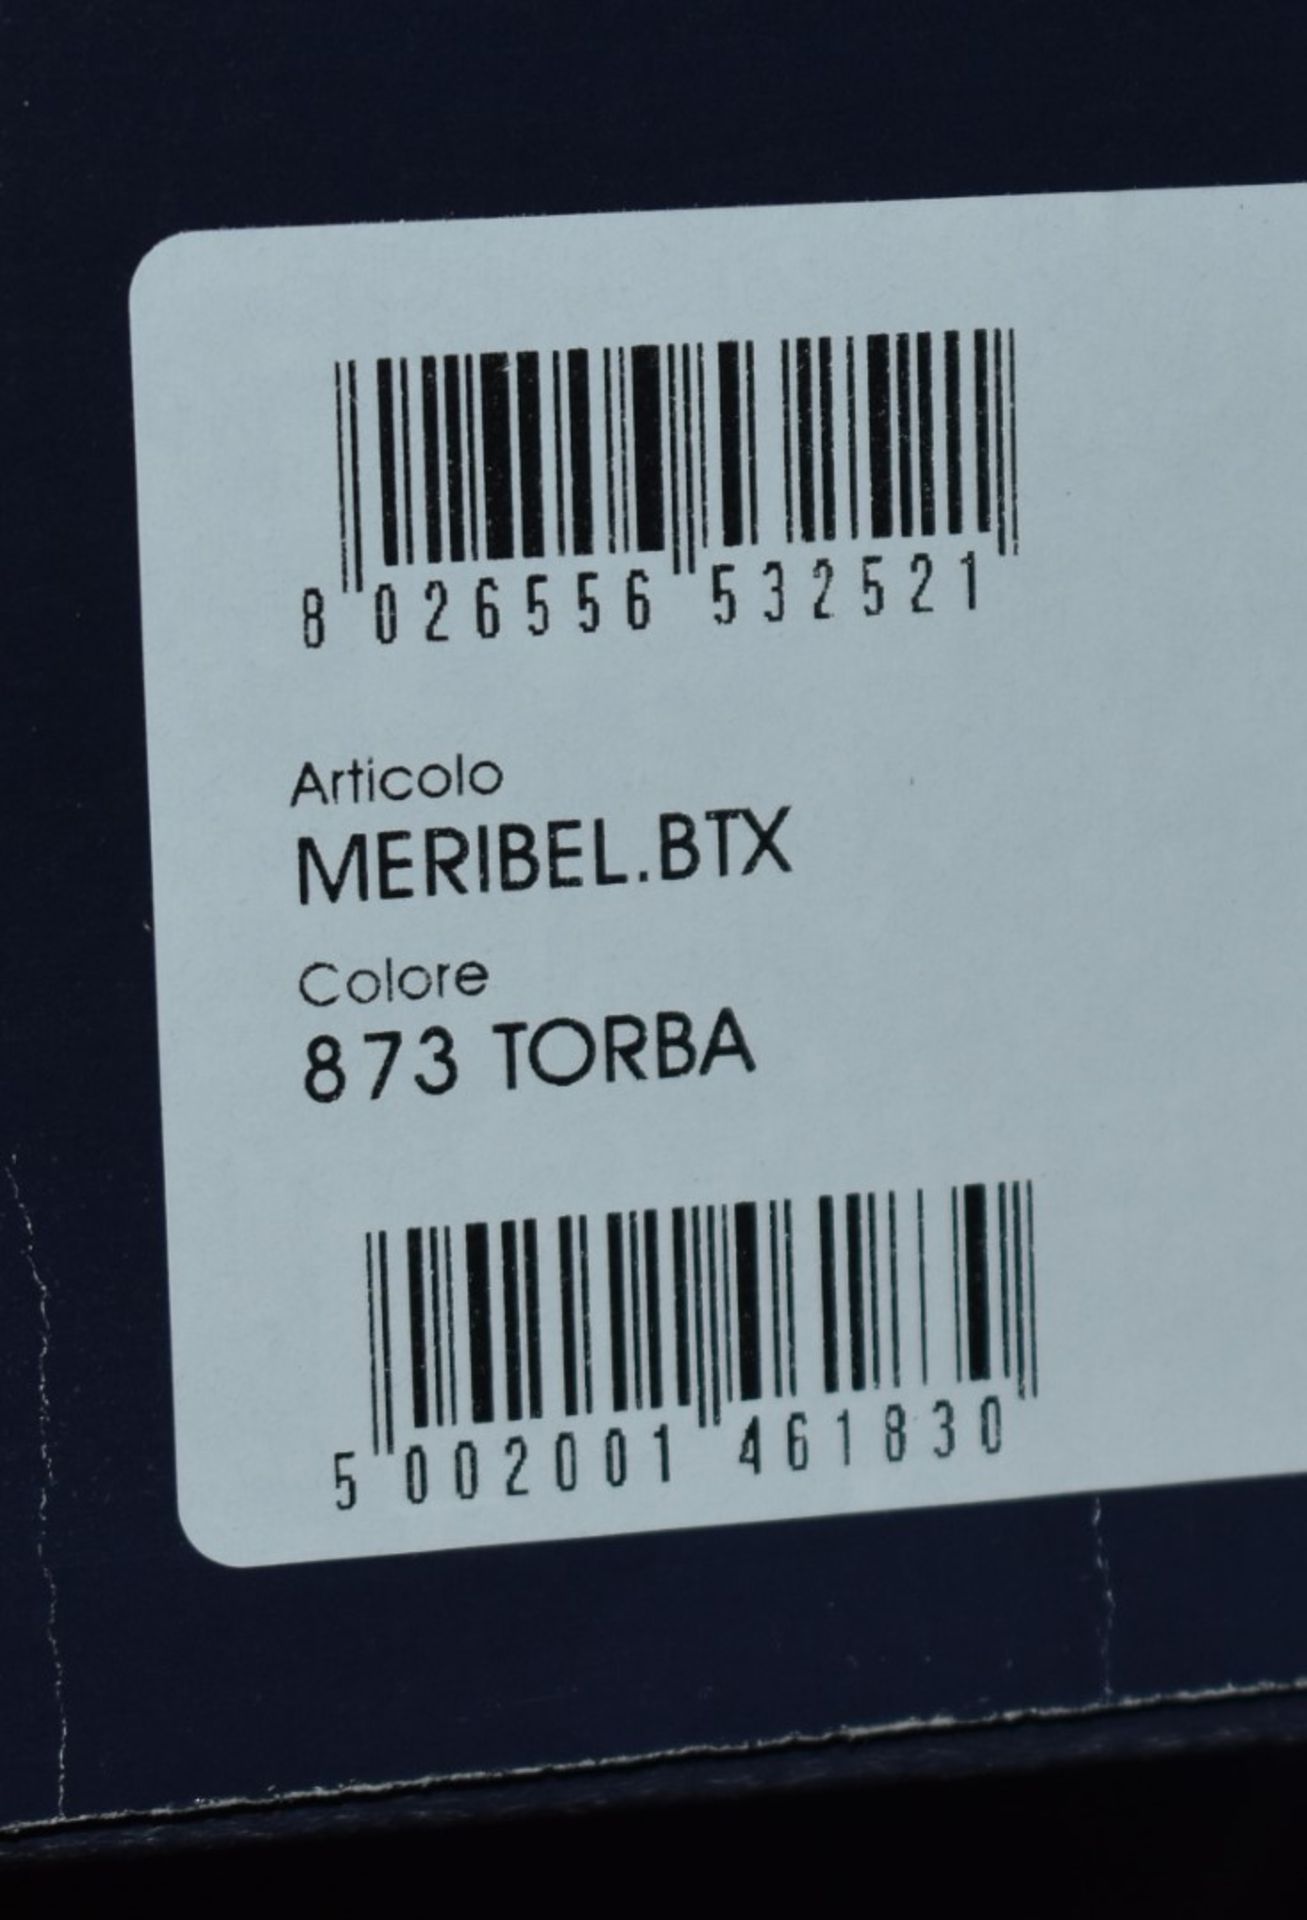 1 x Pair of Designer Olang Meribel 873 Torba Women's Winter Boots - Euro Size 37 - Brand New Boxed - Image 5 of 5